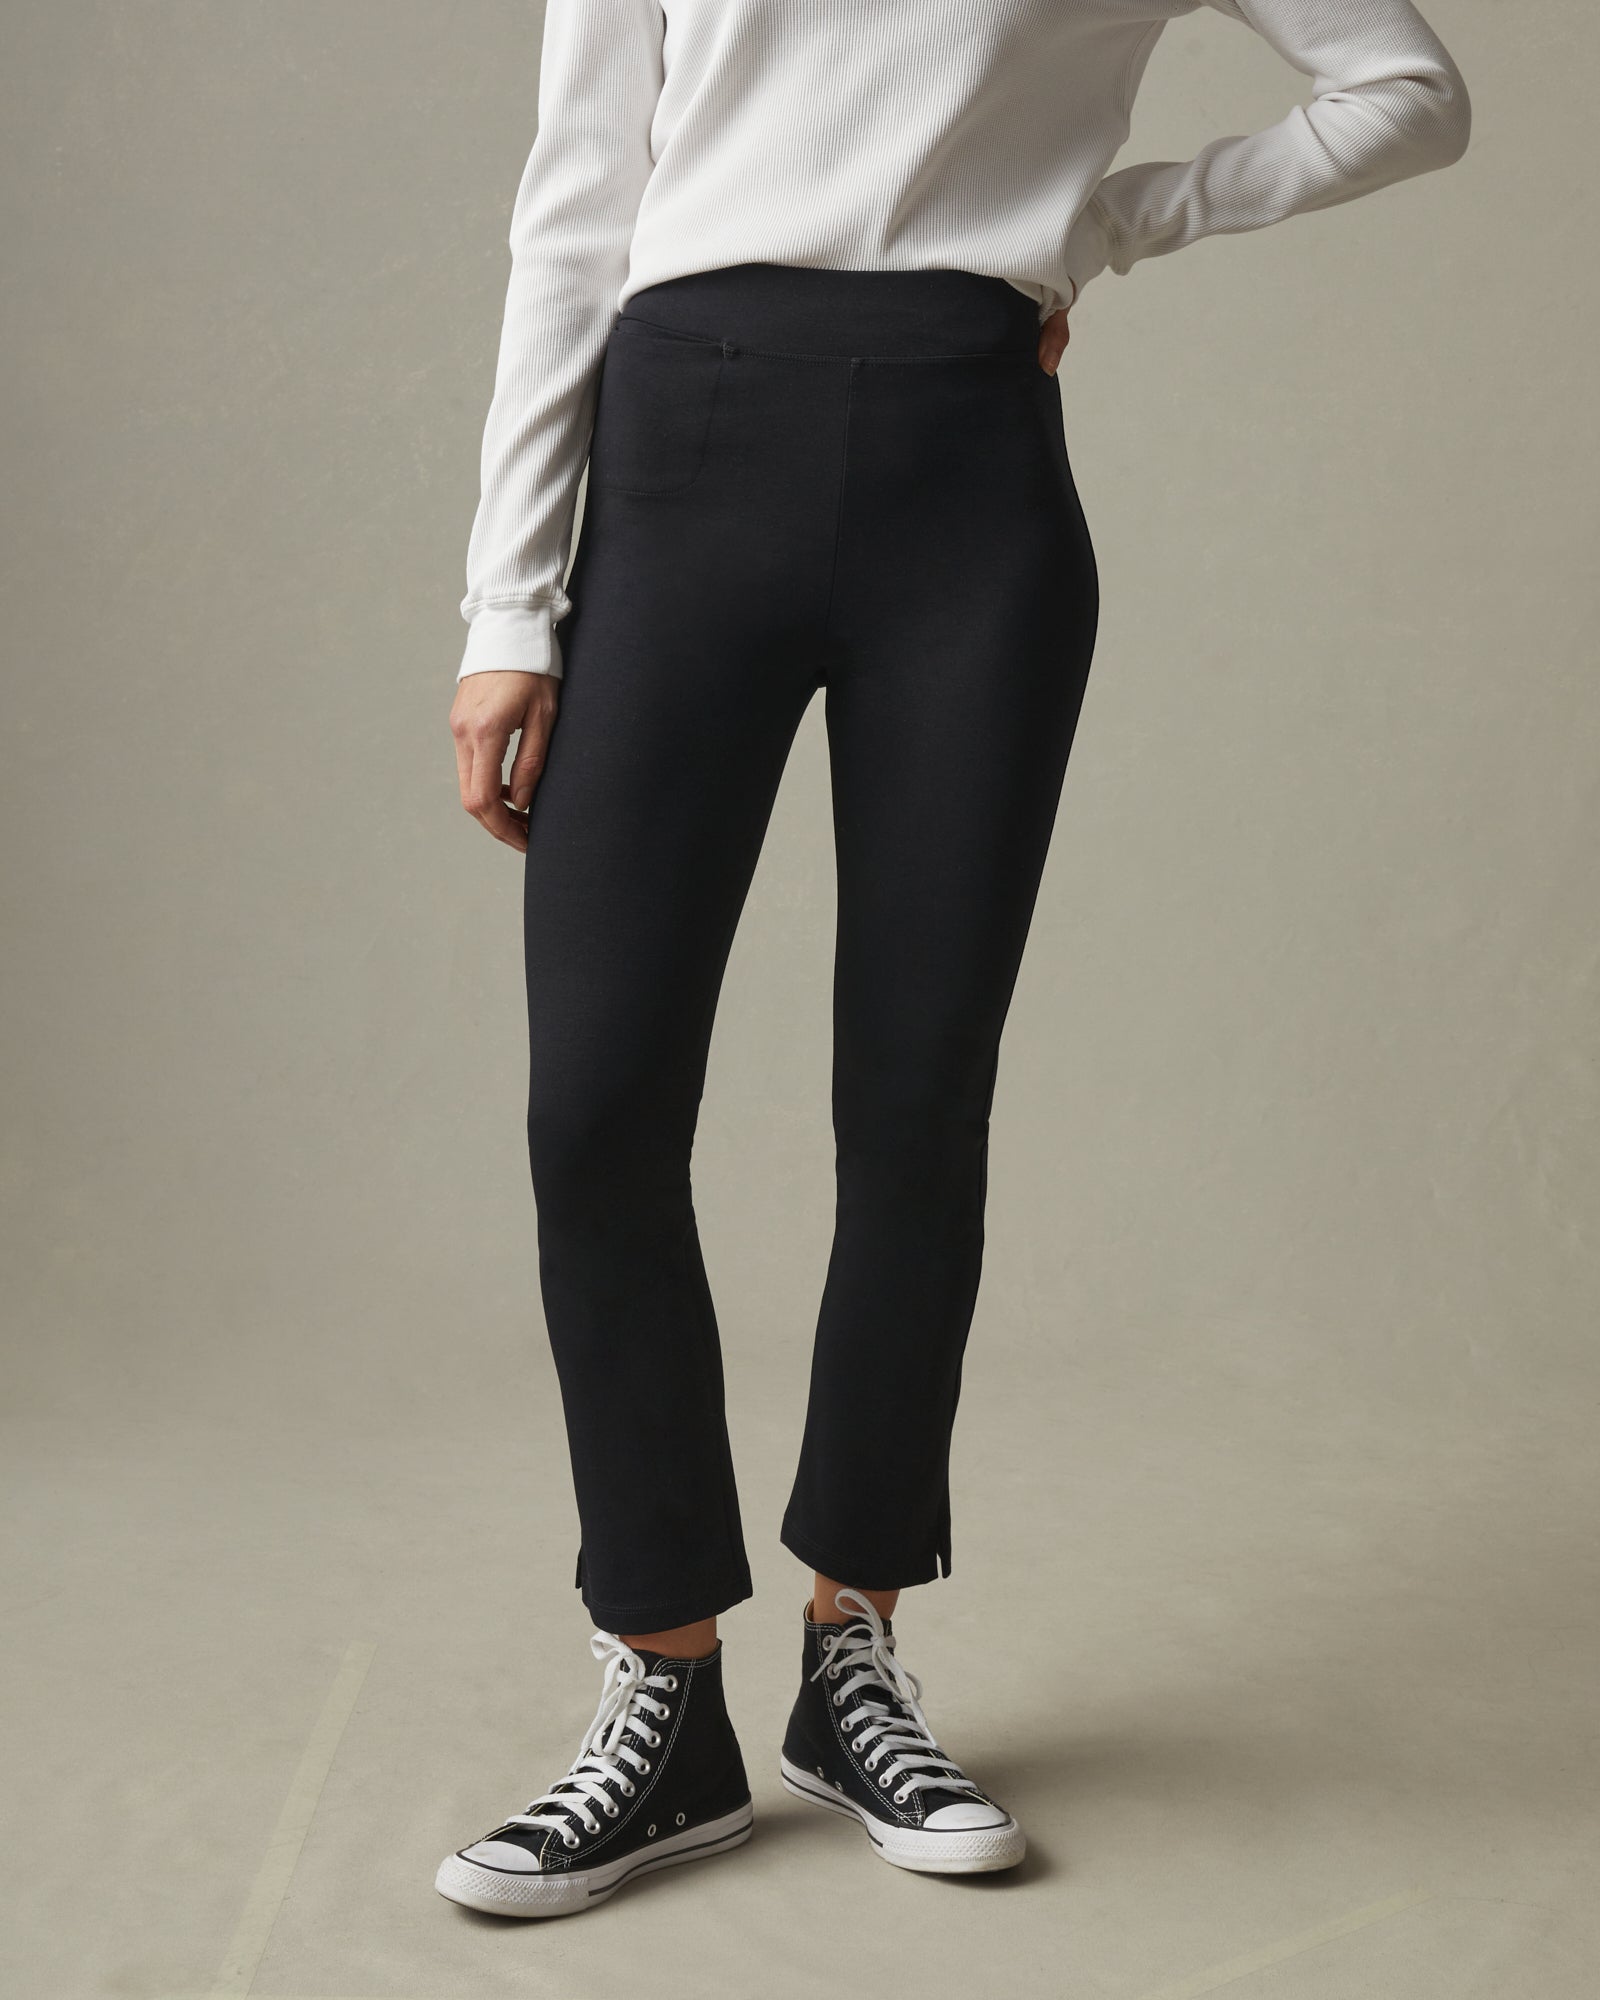 Fabletics Boot Cut & Flare Pants & Jumpsuits for Women - Poshmark